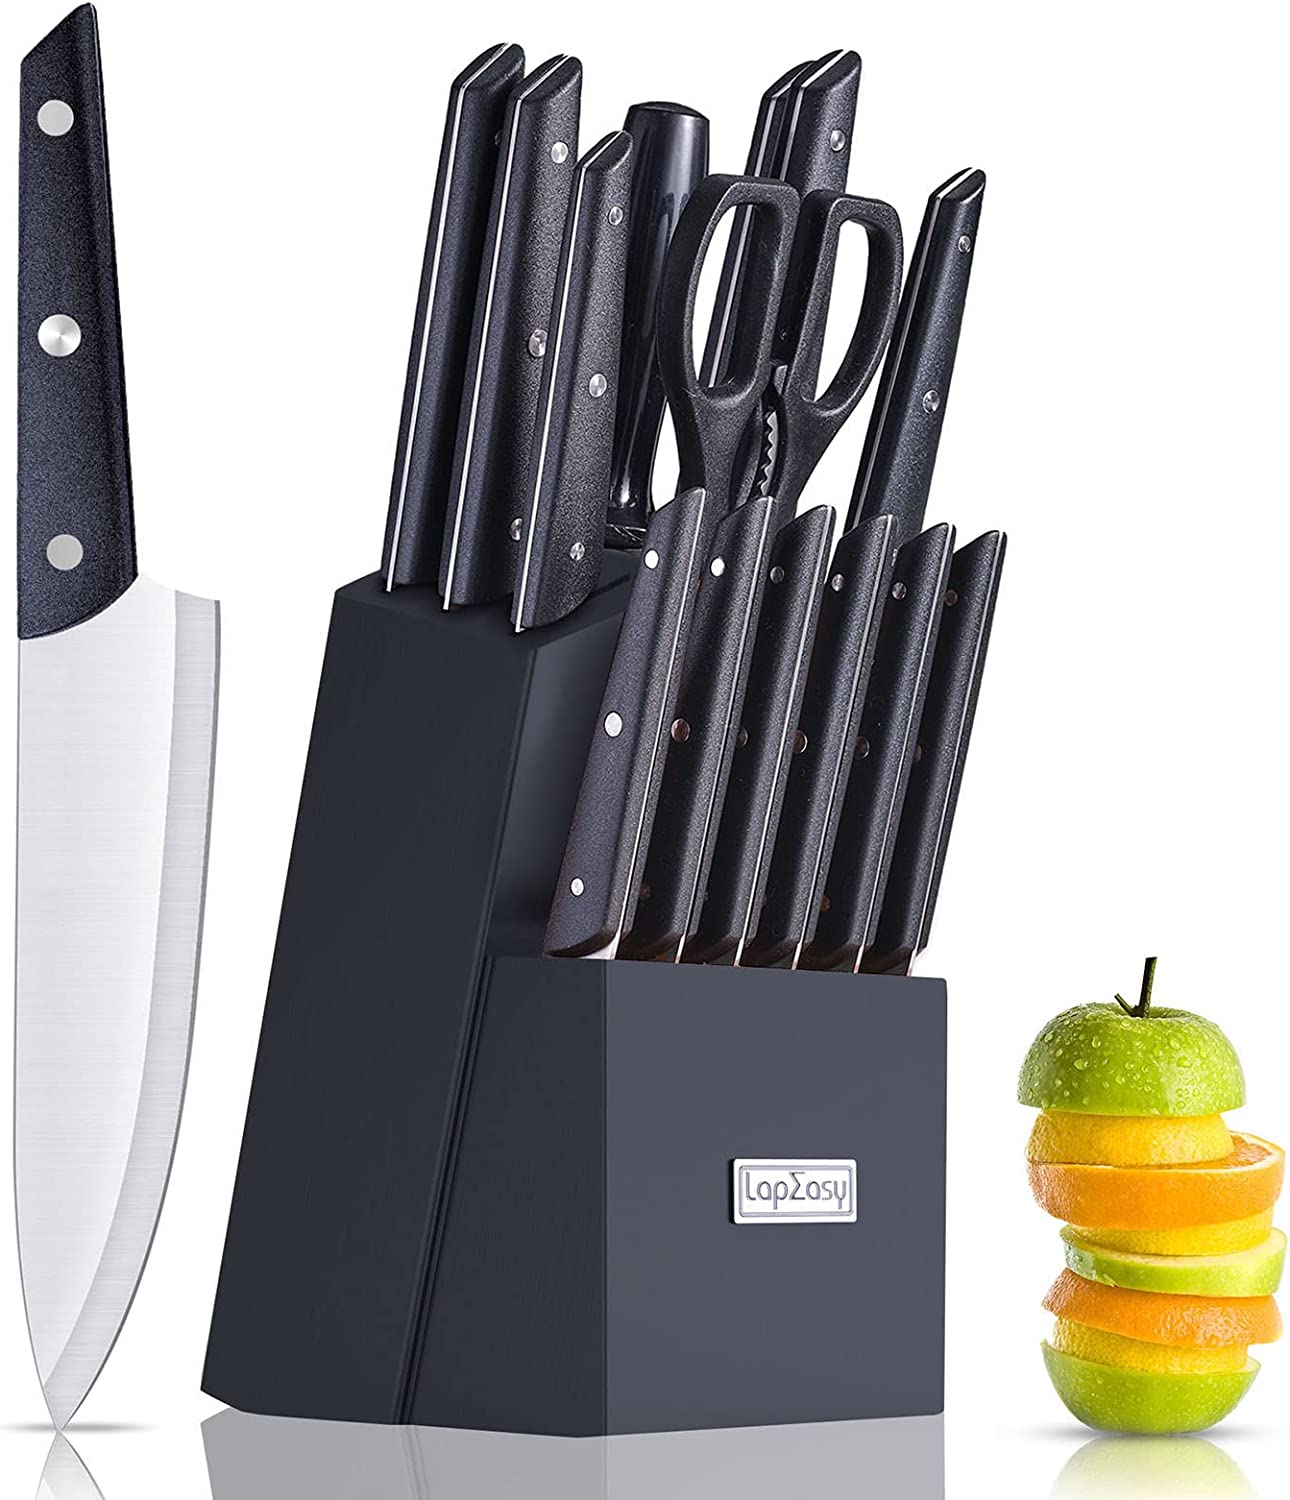 15-Piece Kitchen Knife Set with Block 